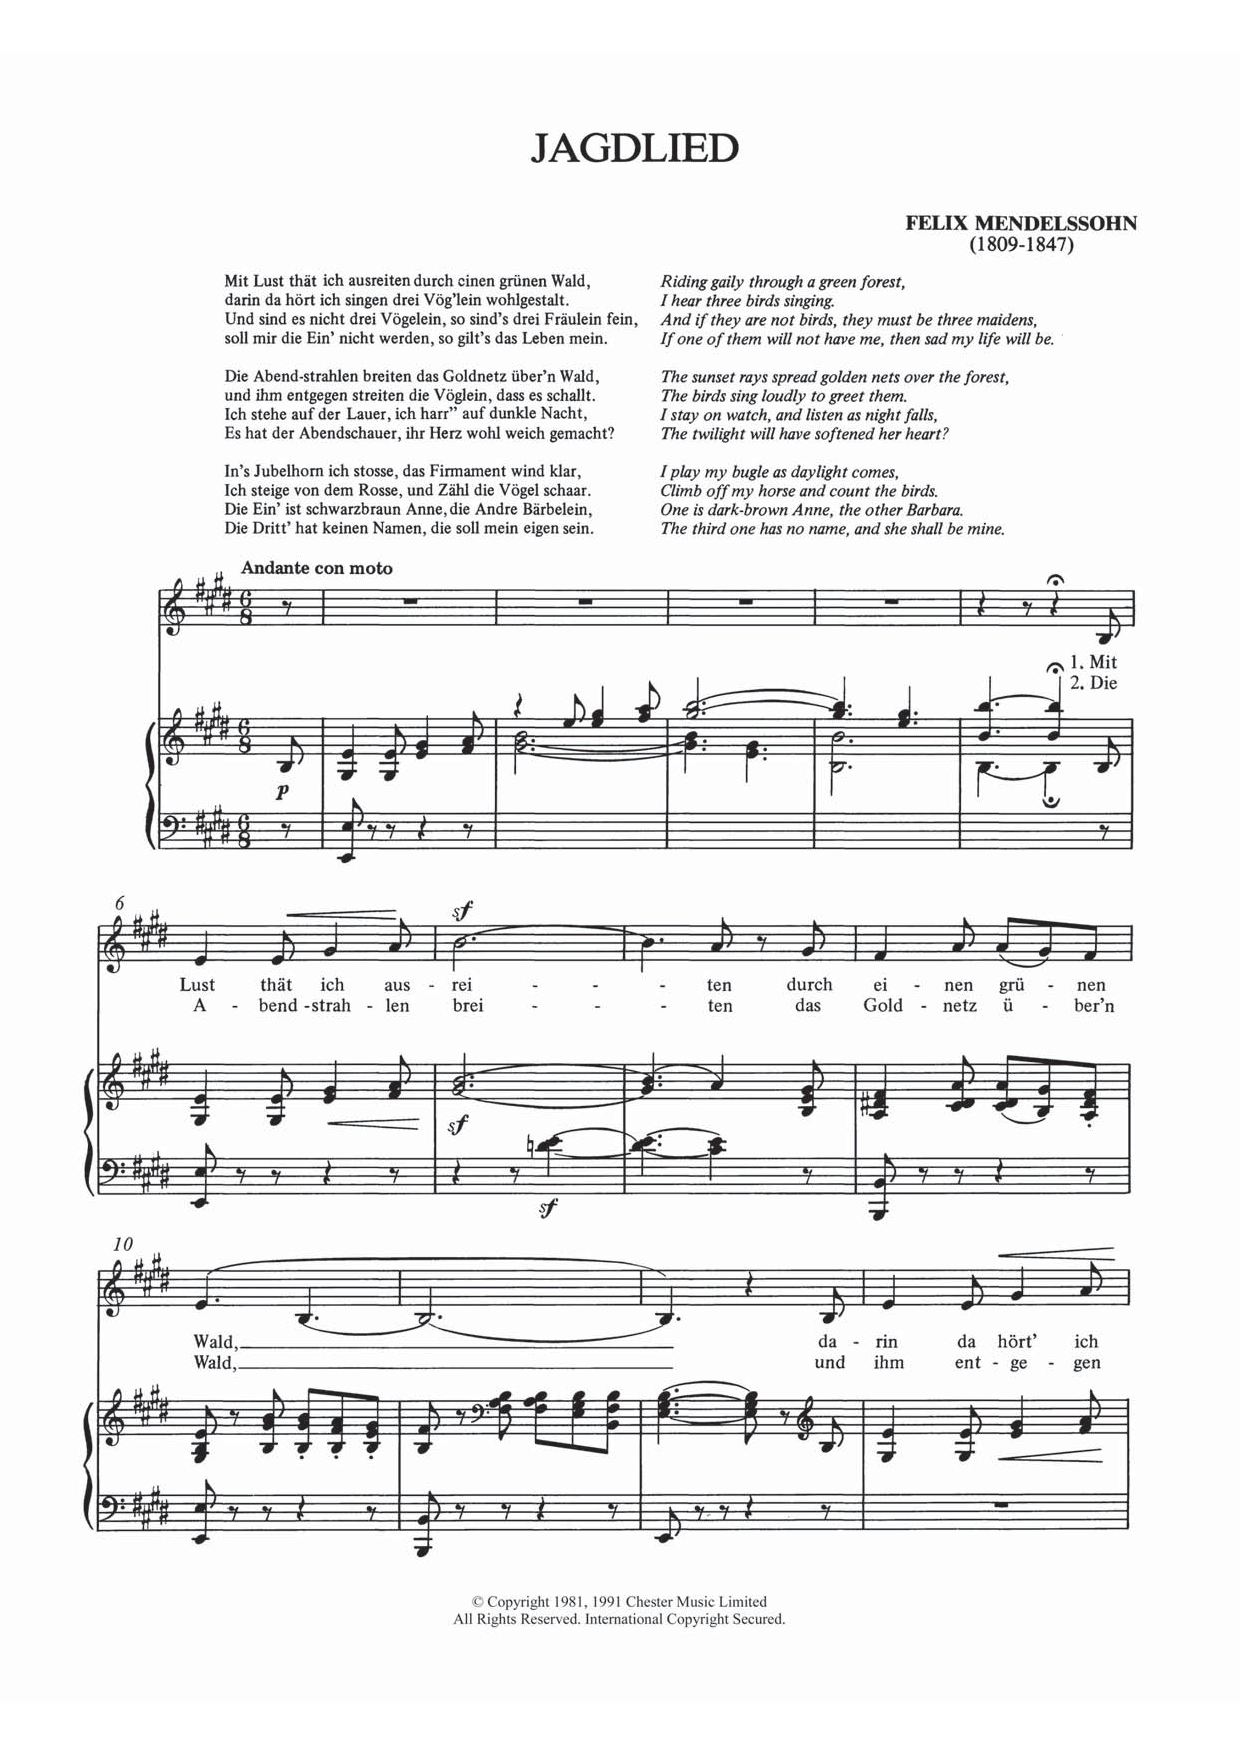 Felix Mendelssohn Jagdlied Sheet Music Notes & Chords for Piano & Vocal - Download or Print PDF